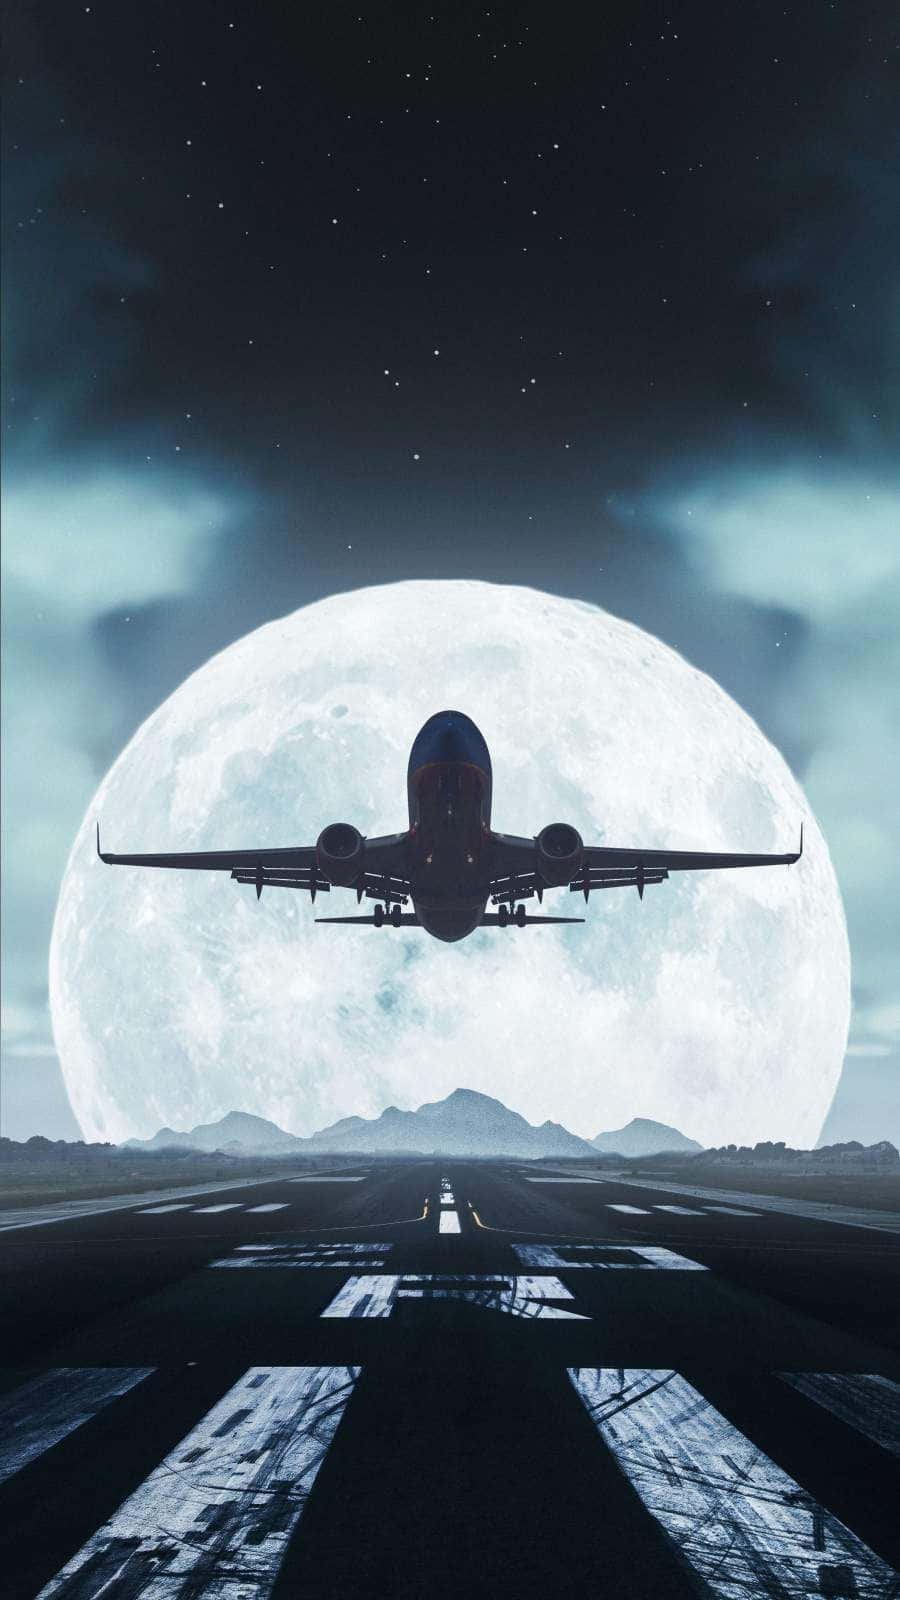 Tải xuống APK Airplane Wallpaper cho Android